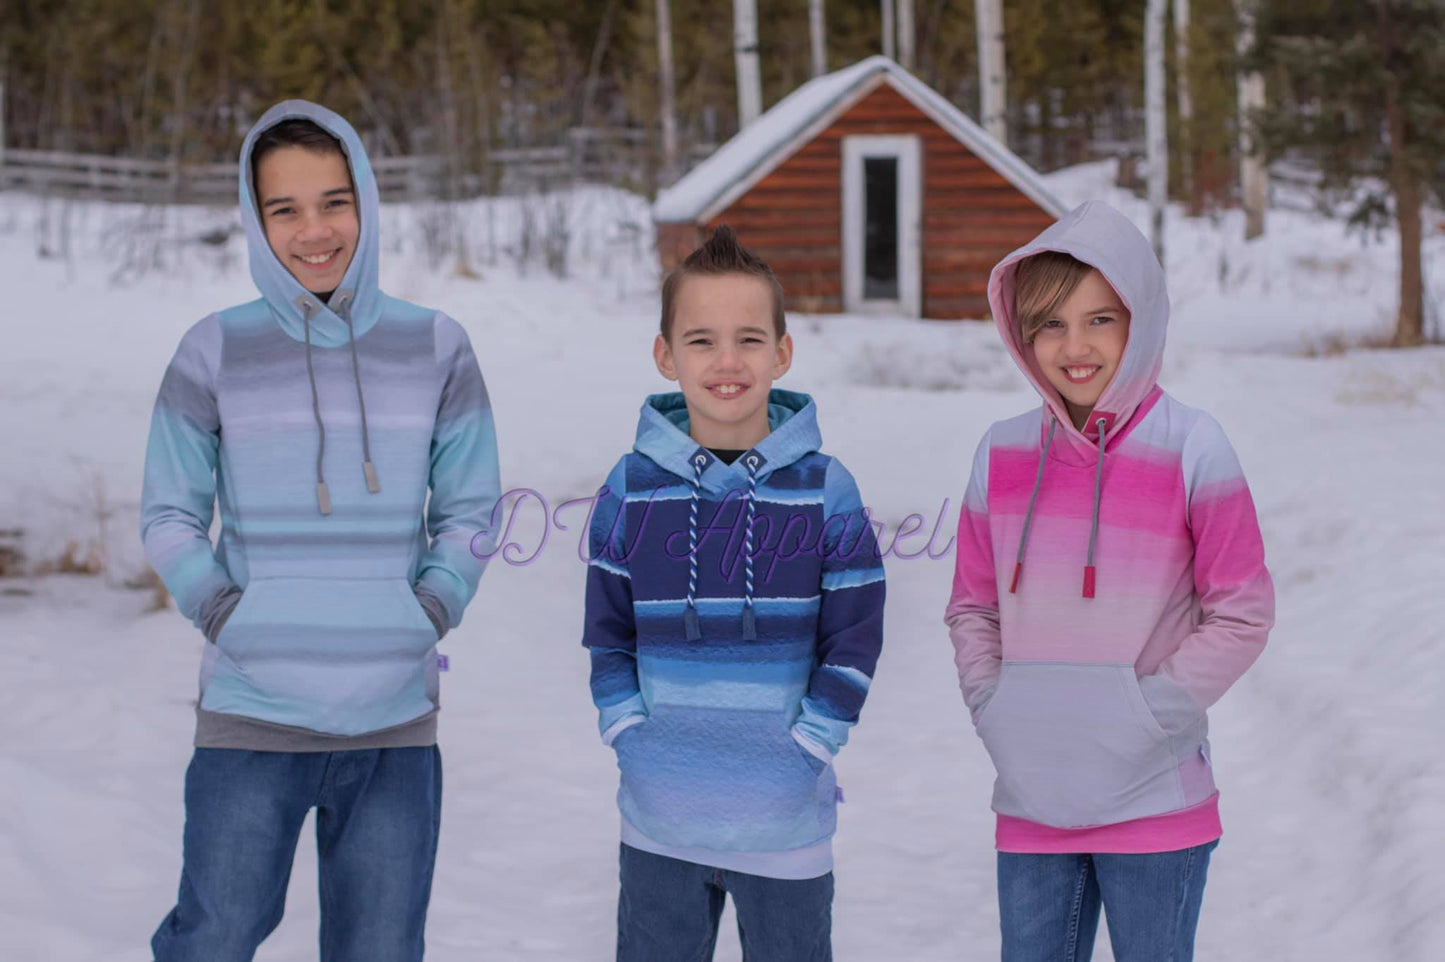 Kaius Unisex Children's Sweatshirt